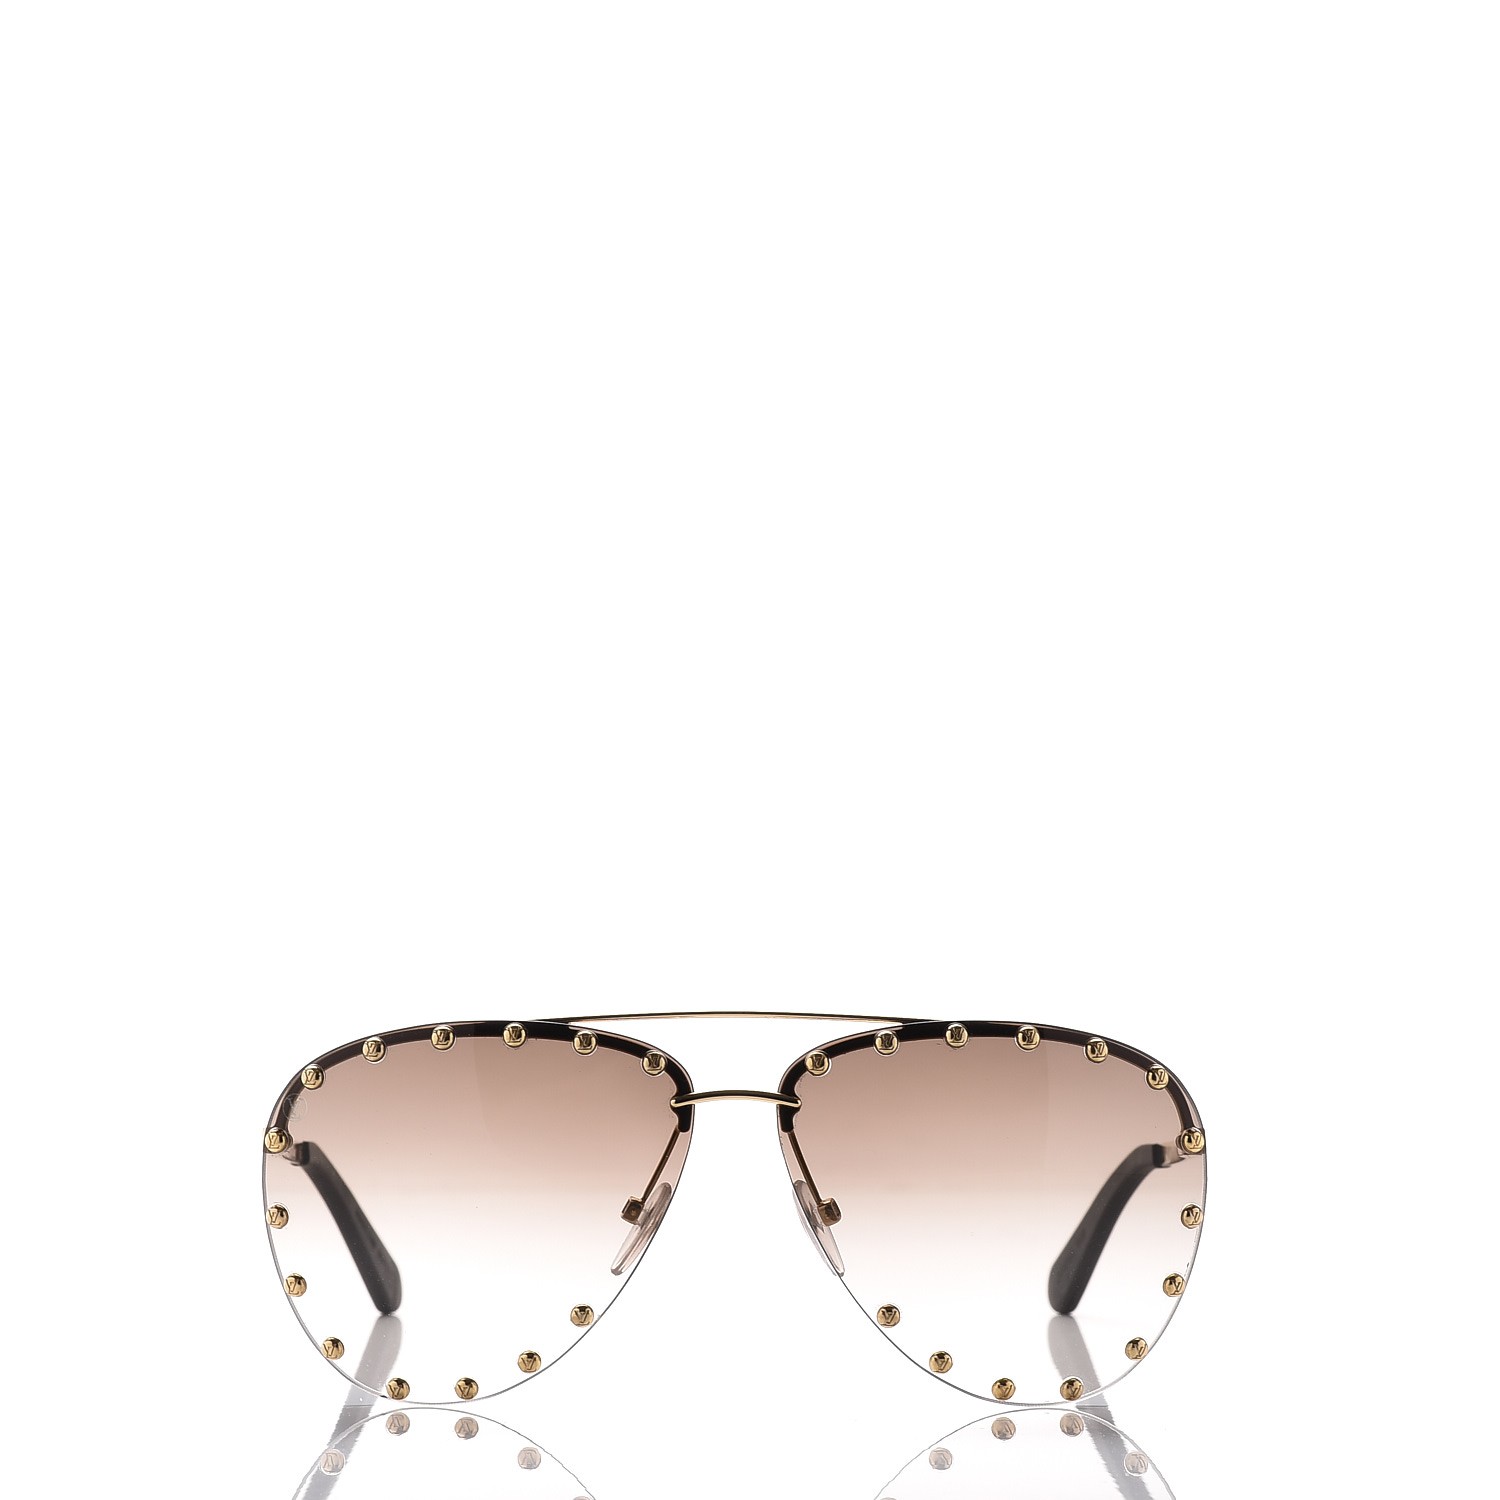 Aviator sunglasses Louis Vuitton Brown in Plastic - 24817313